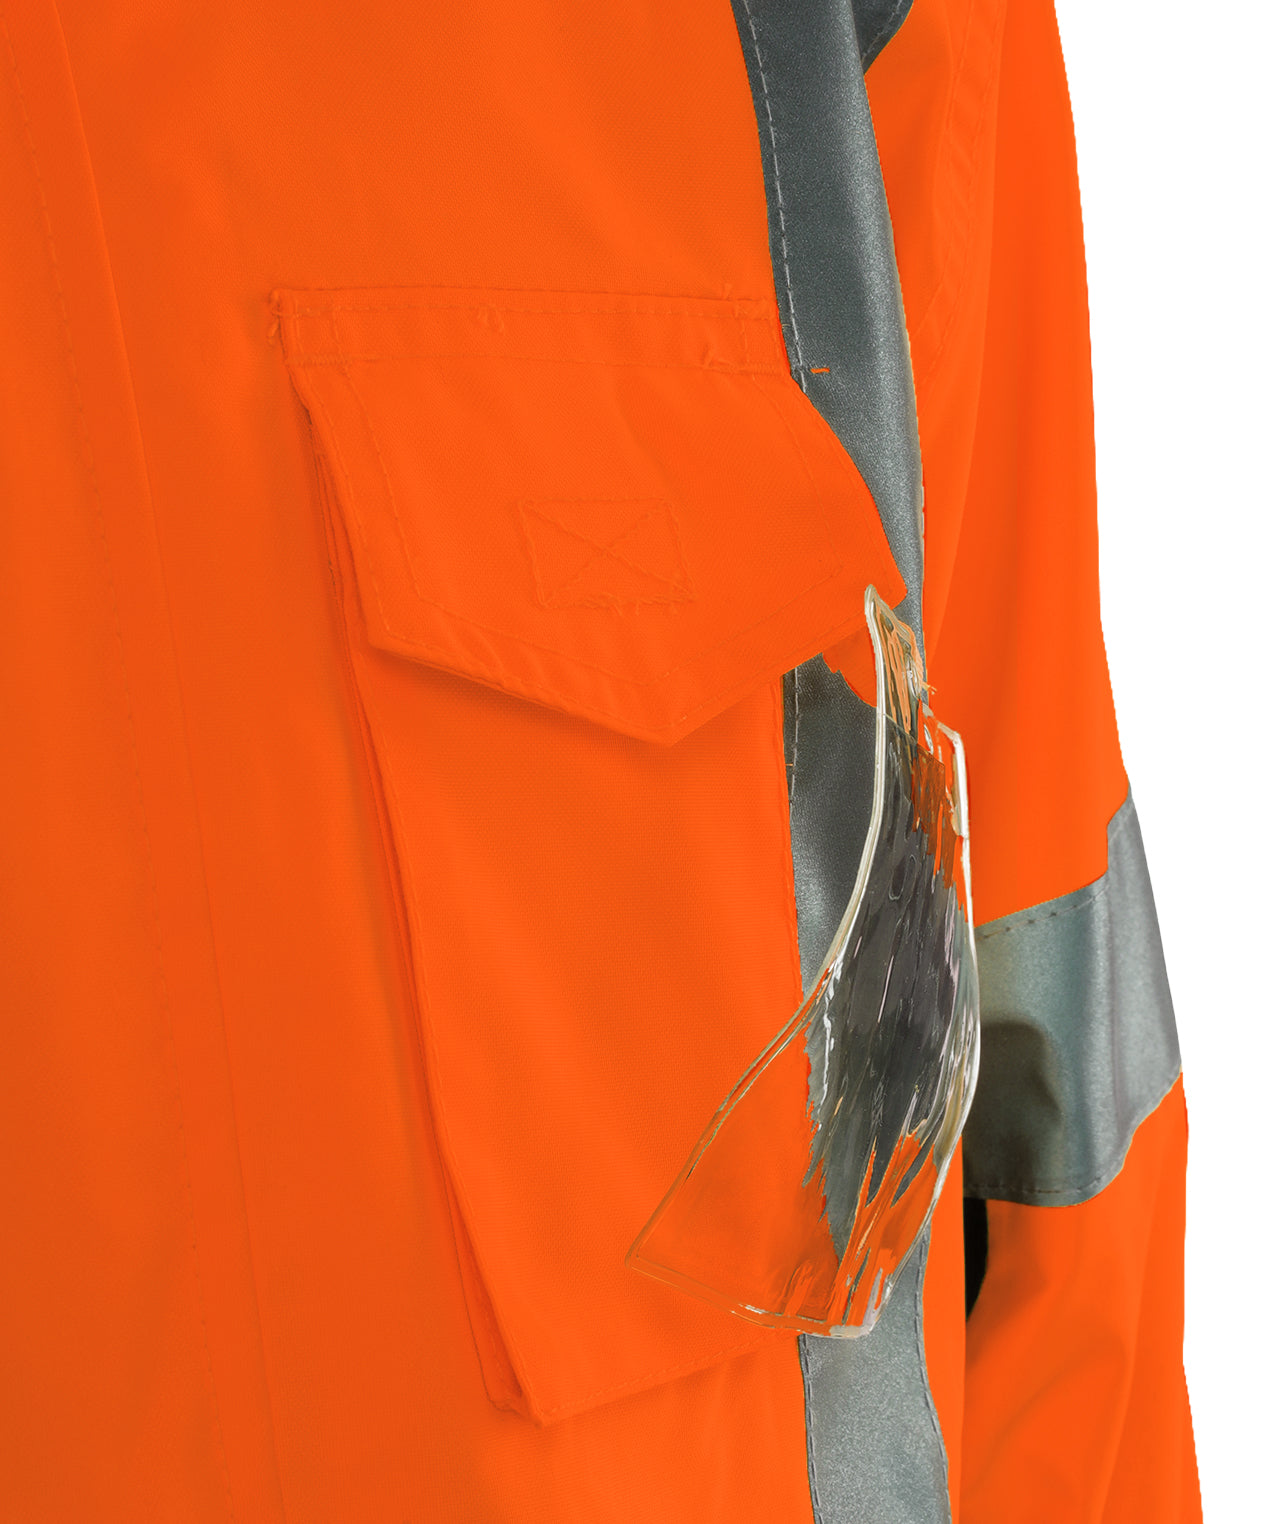 Orange High Visibility Jackets  Reflective Safety Vest Orange